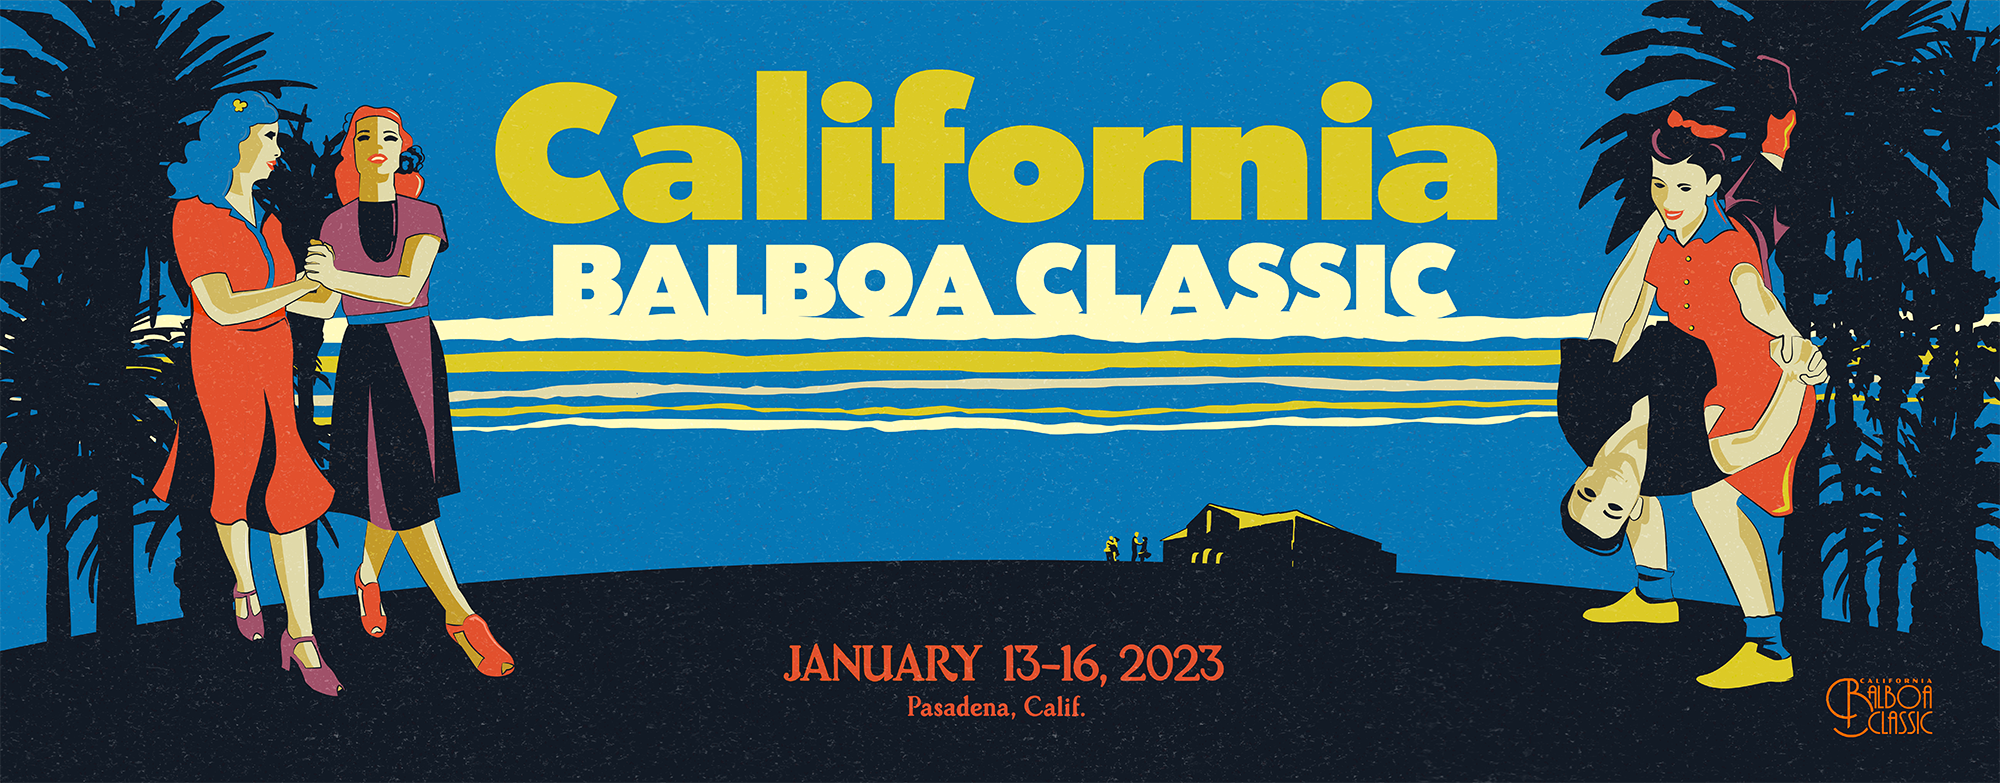 California Balboa Classic banner